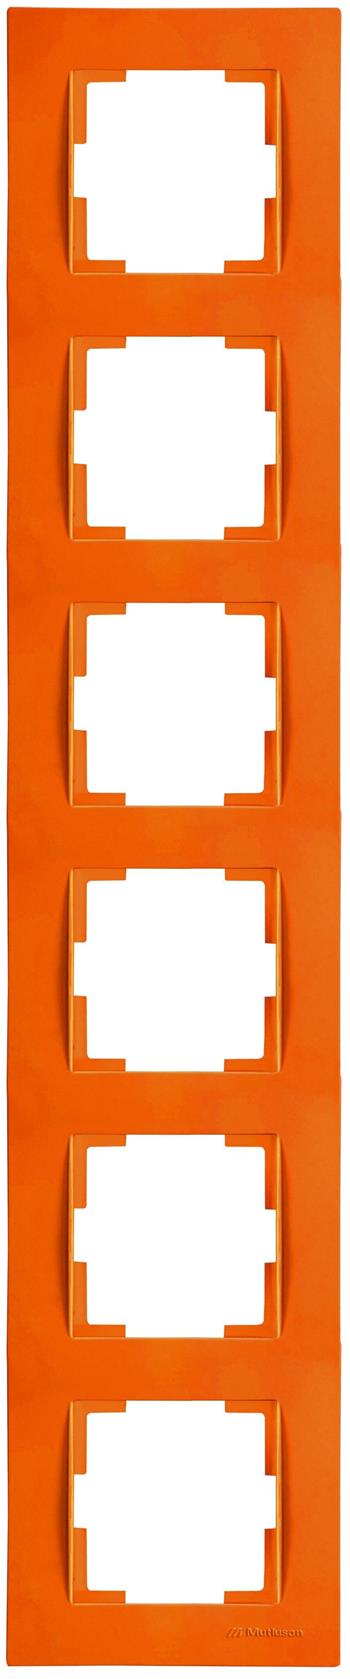 6fach Rahmen vertikal Orange (RITA Pastell Farben)